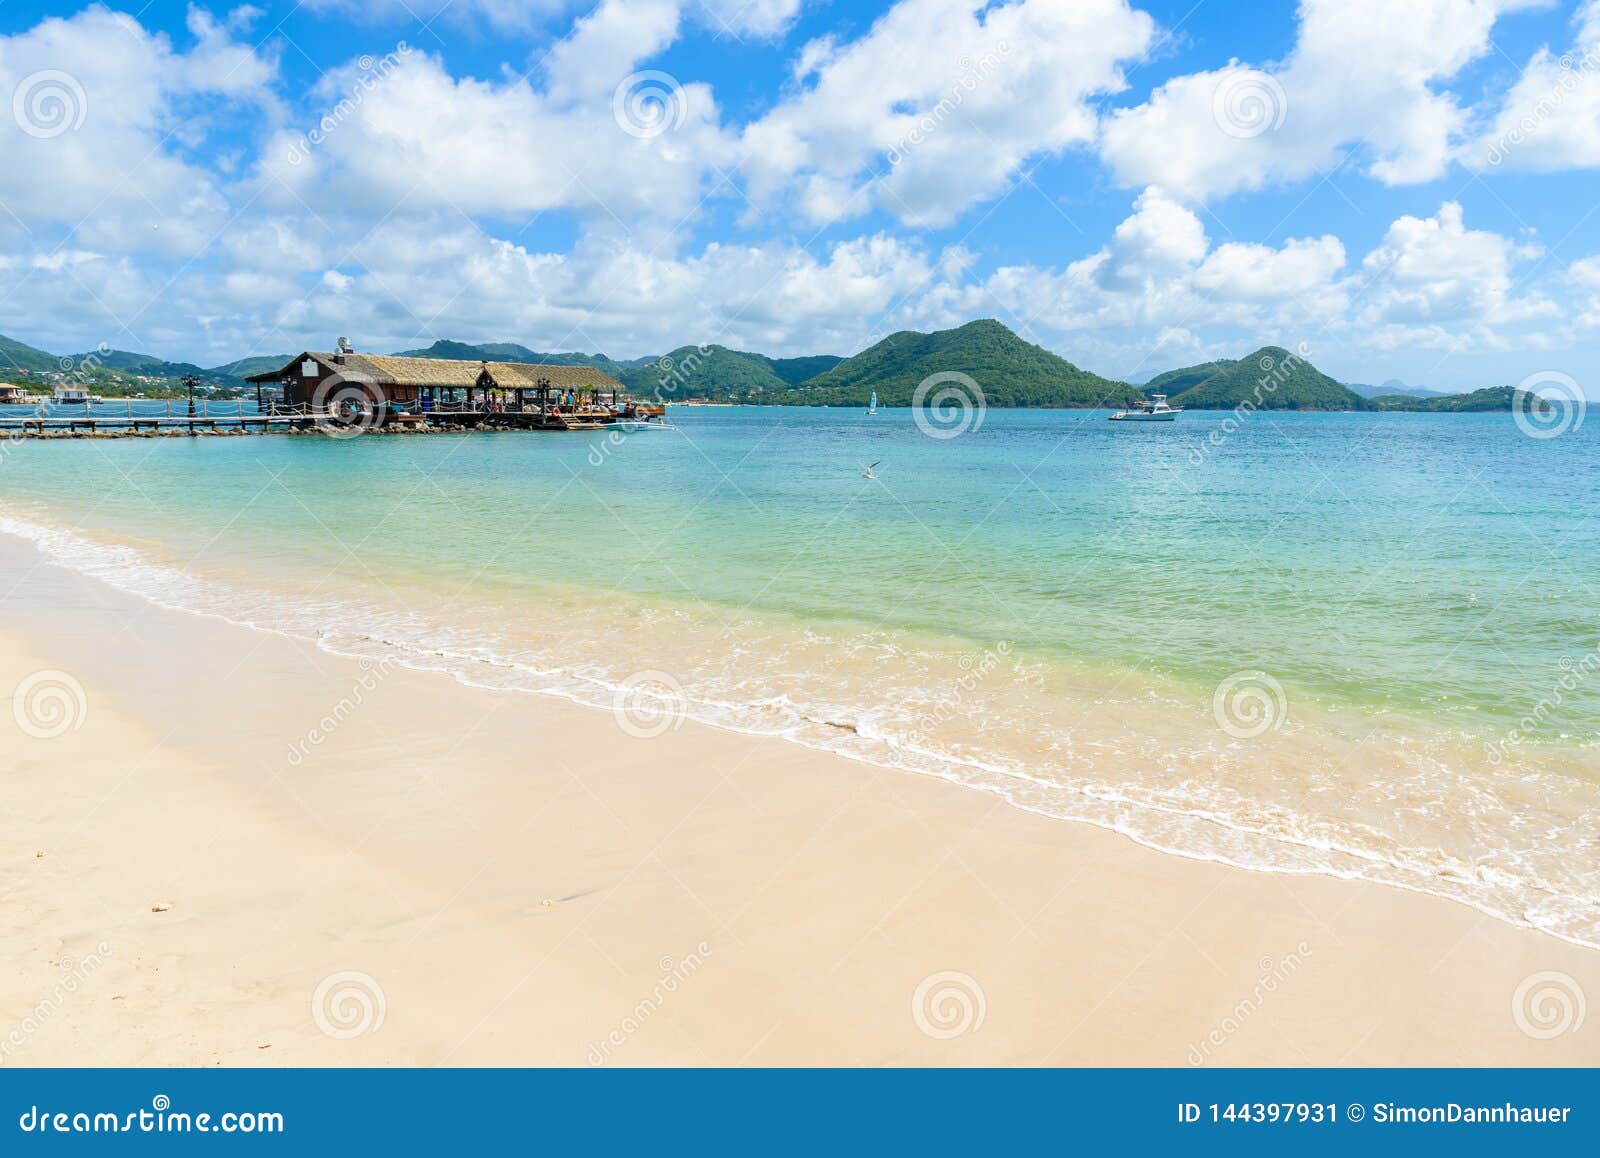 pigeon island beach - tropical coast on the caribbean island of st. lucia. it is a paradise destination with a white sand beach